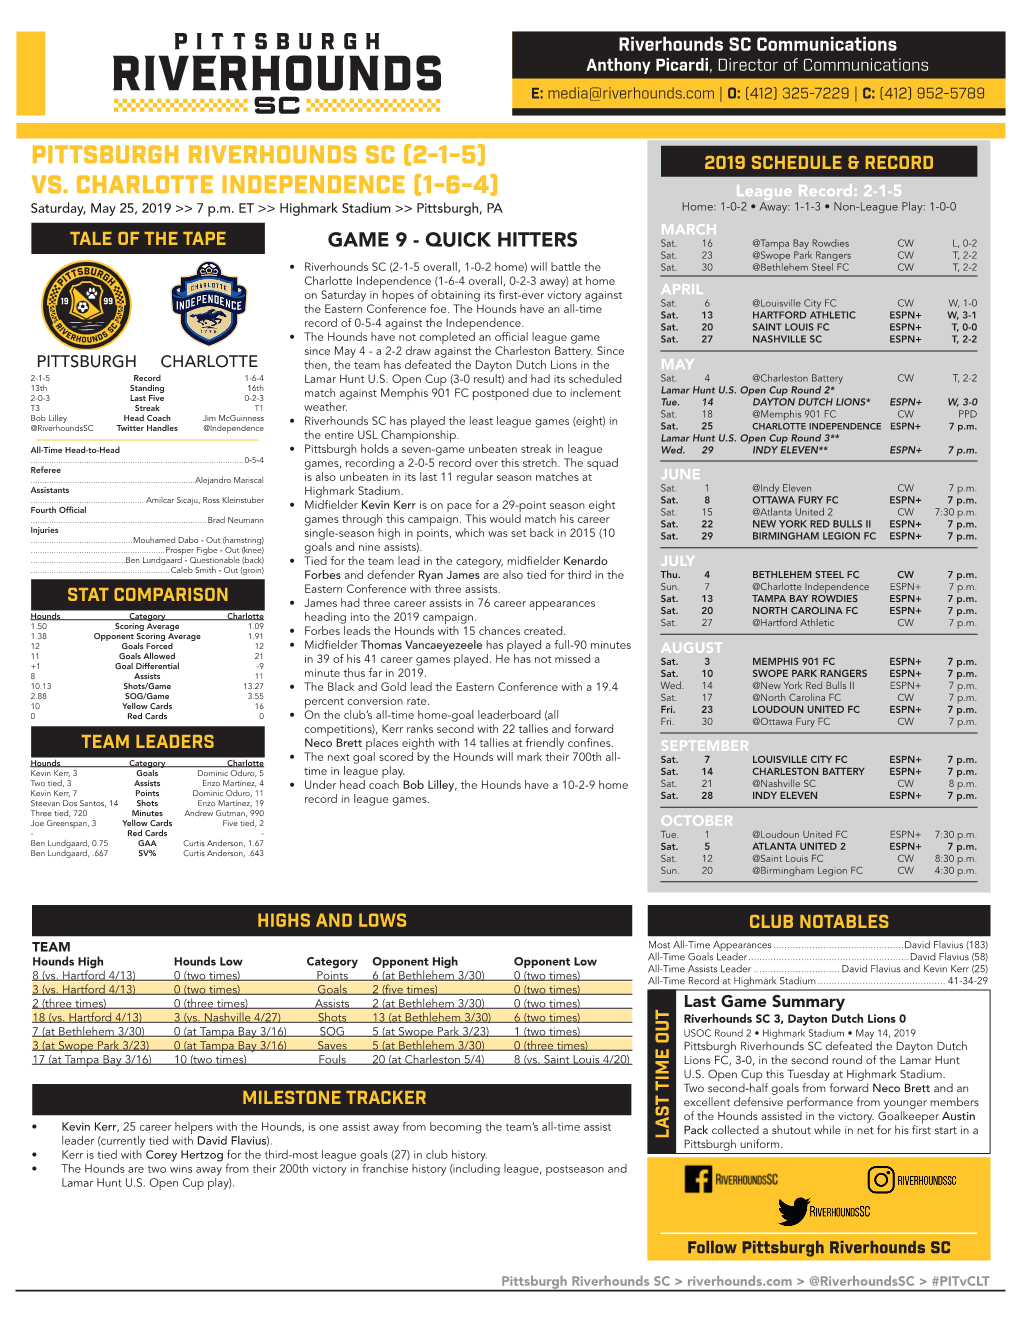 Pittsburgh Riverhounds Sc (2-1-5) 2019 Schedule & Record Vs